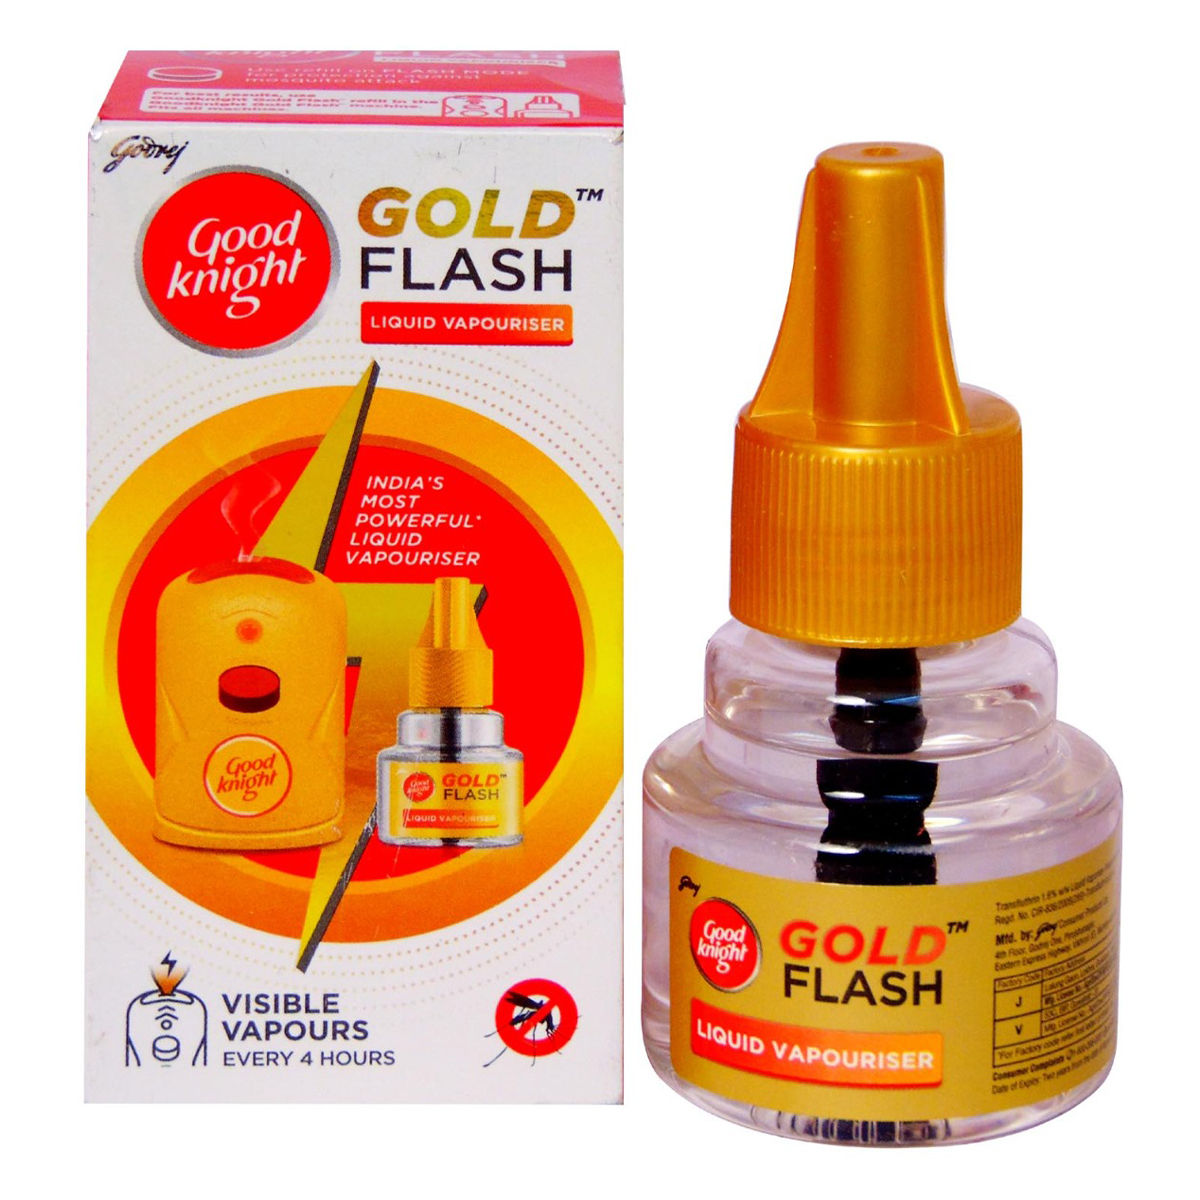 Buy Good Knight Gold Flash Liquid Vapouriser, 45 ml Online